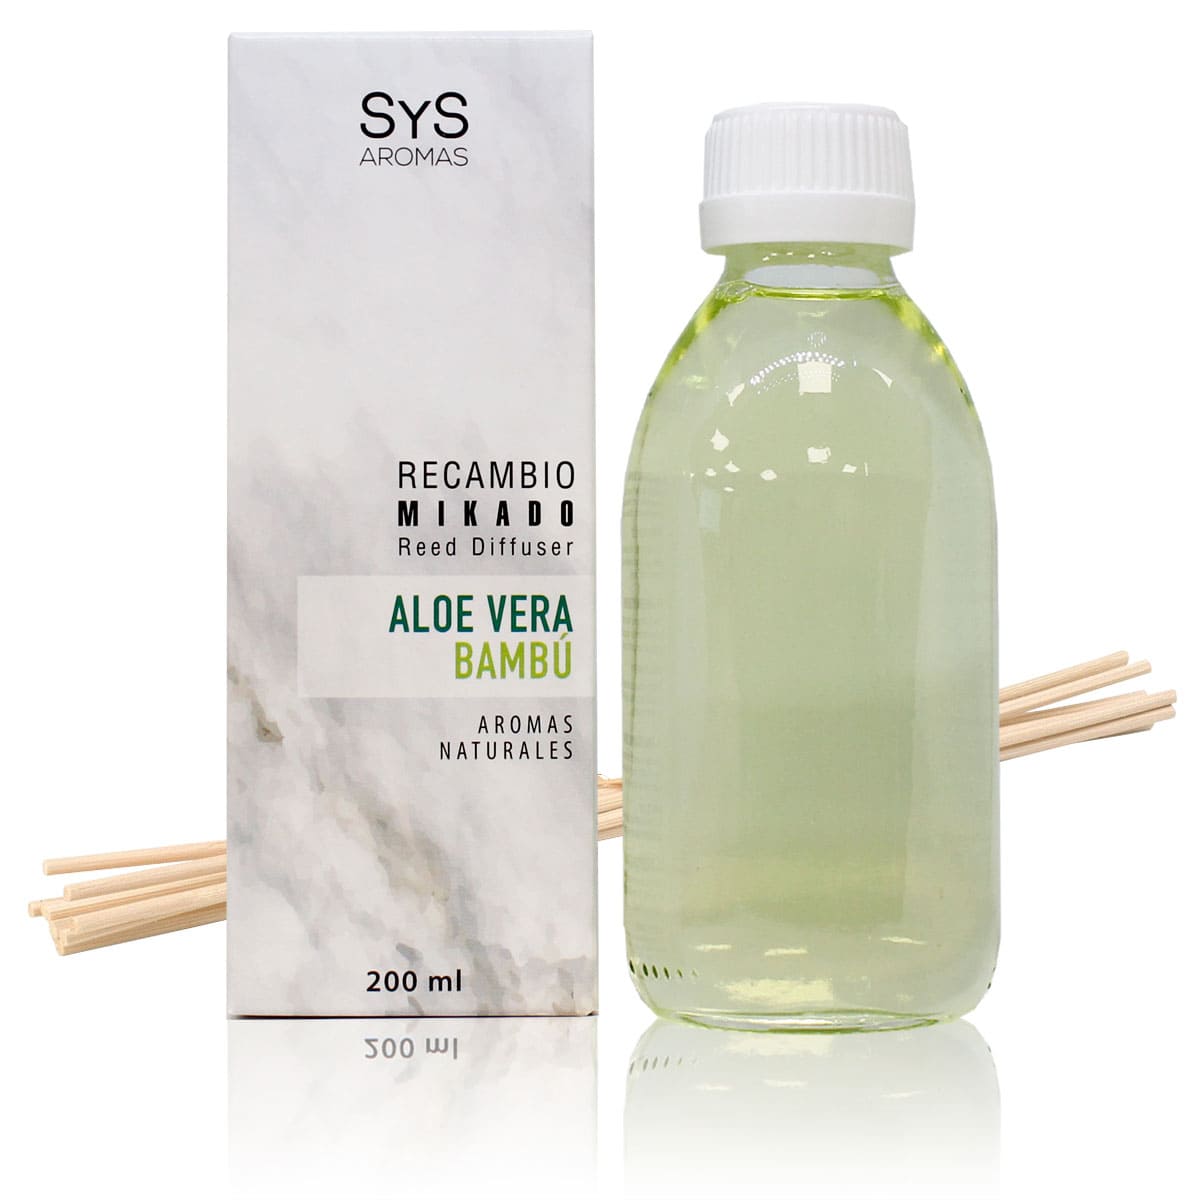 Buy Aloe vera Bamboo Mikado Refill 200ml + Sticks Marmol Collection SYS Aromas